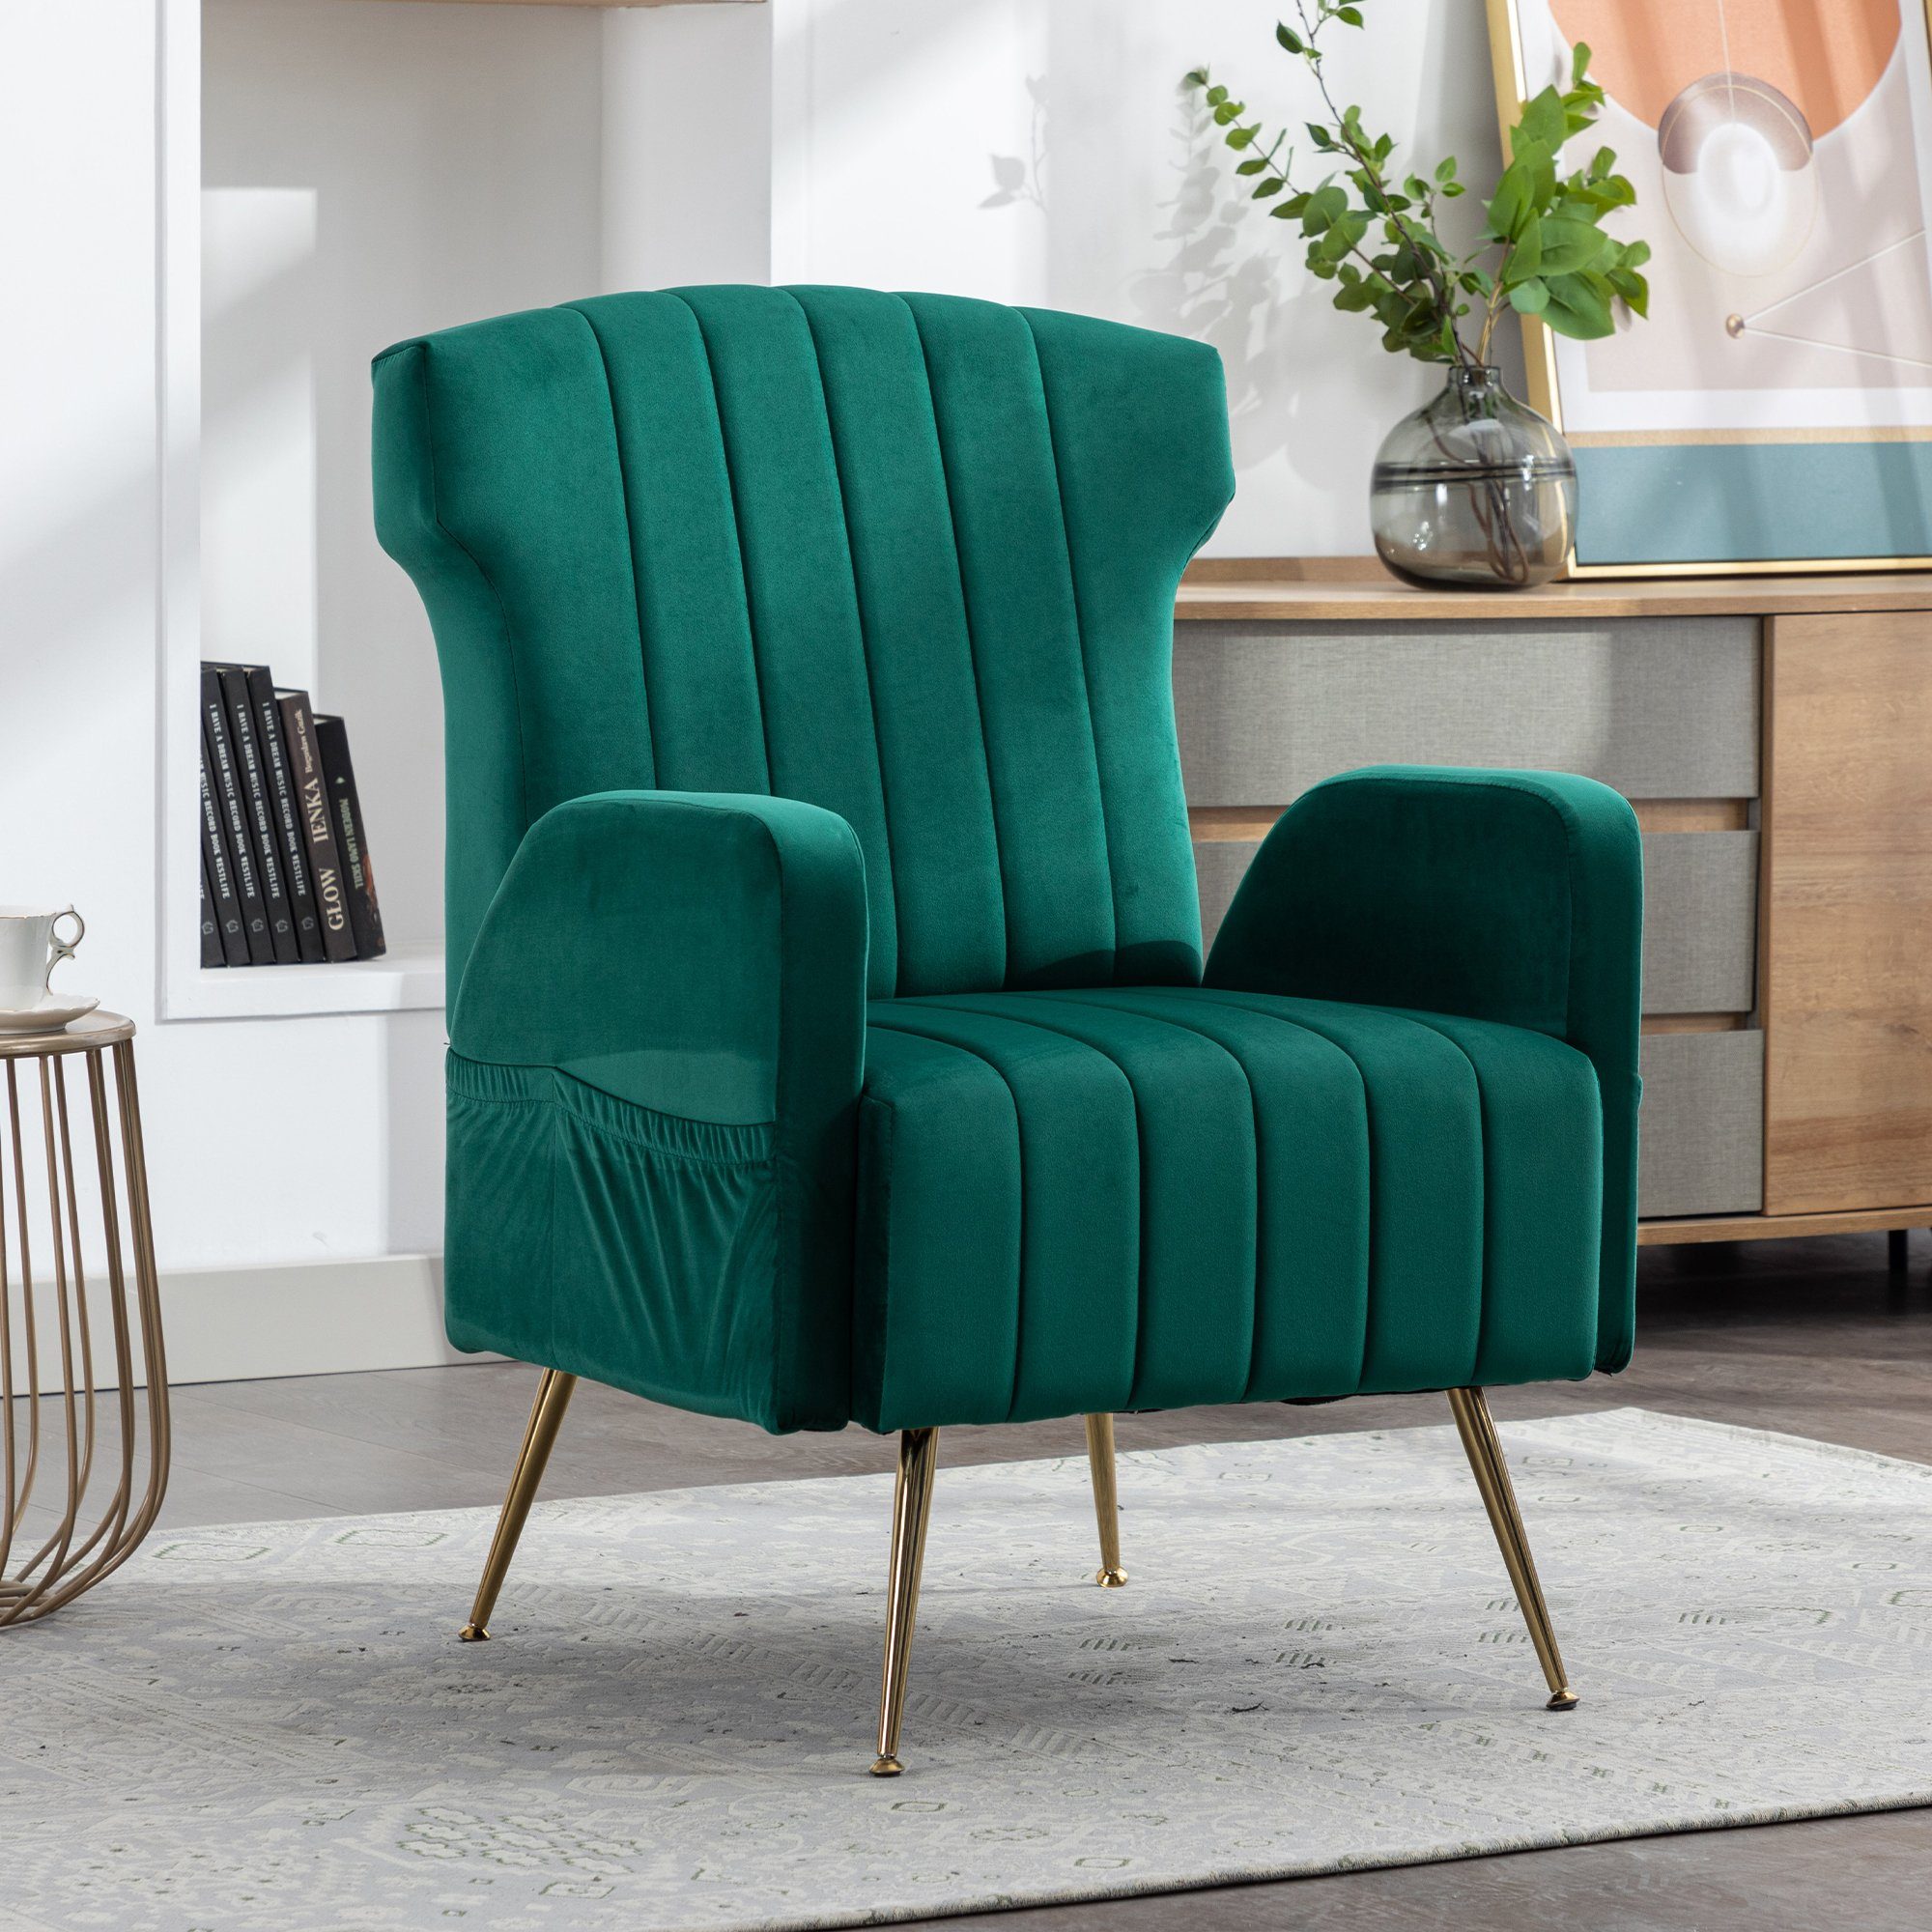 Odikalo Loungesessel Einzelsofa Akzent Stuhl Freizeit goldene Füßen gepolstert mehrfarbig Grün | Loungesessel